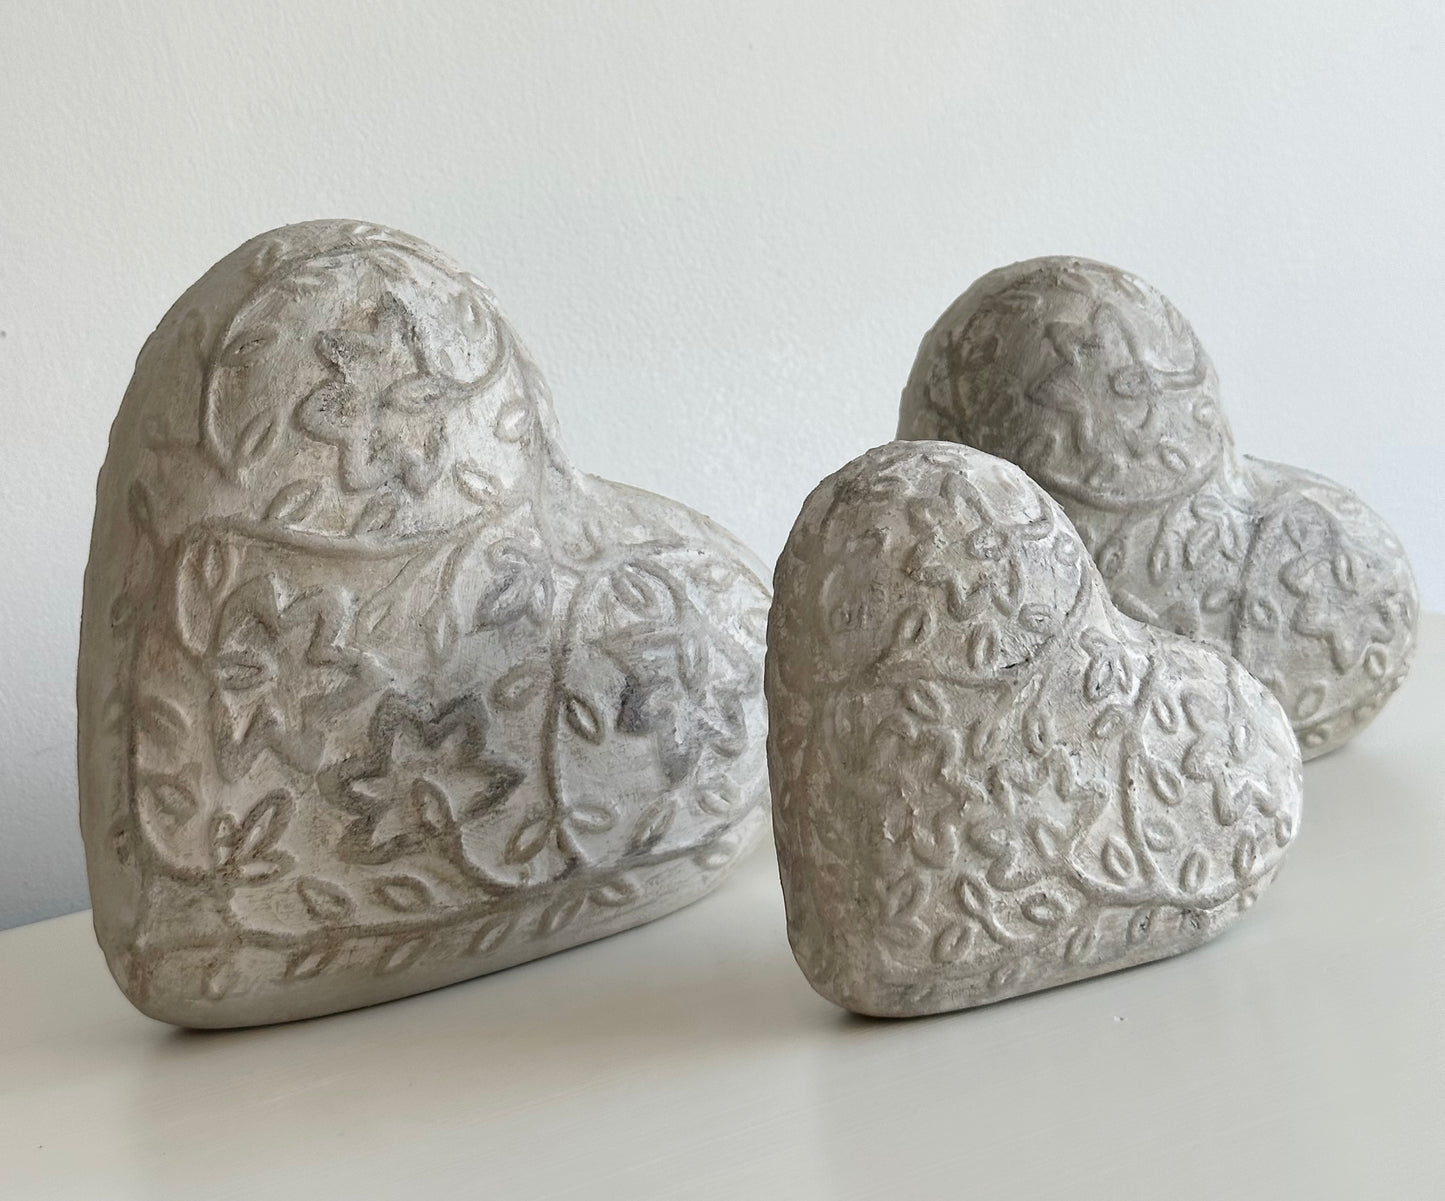 Rustic Ceramic love heart ornaments